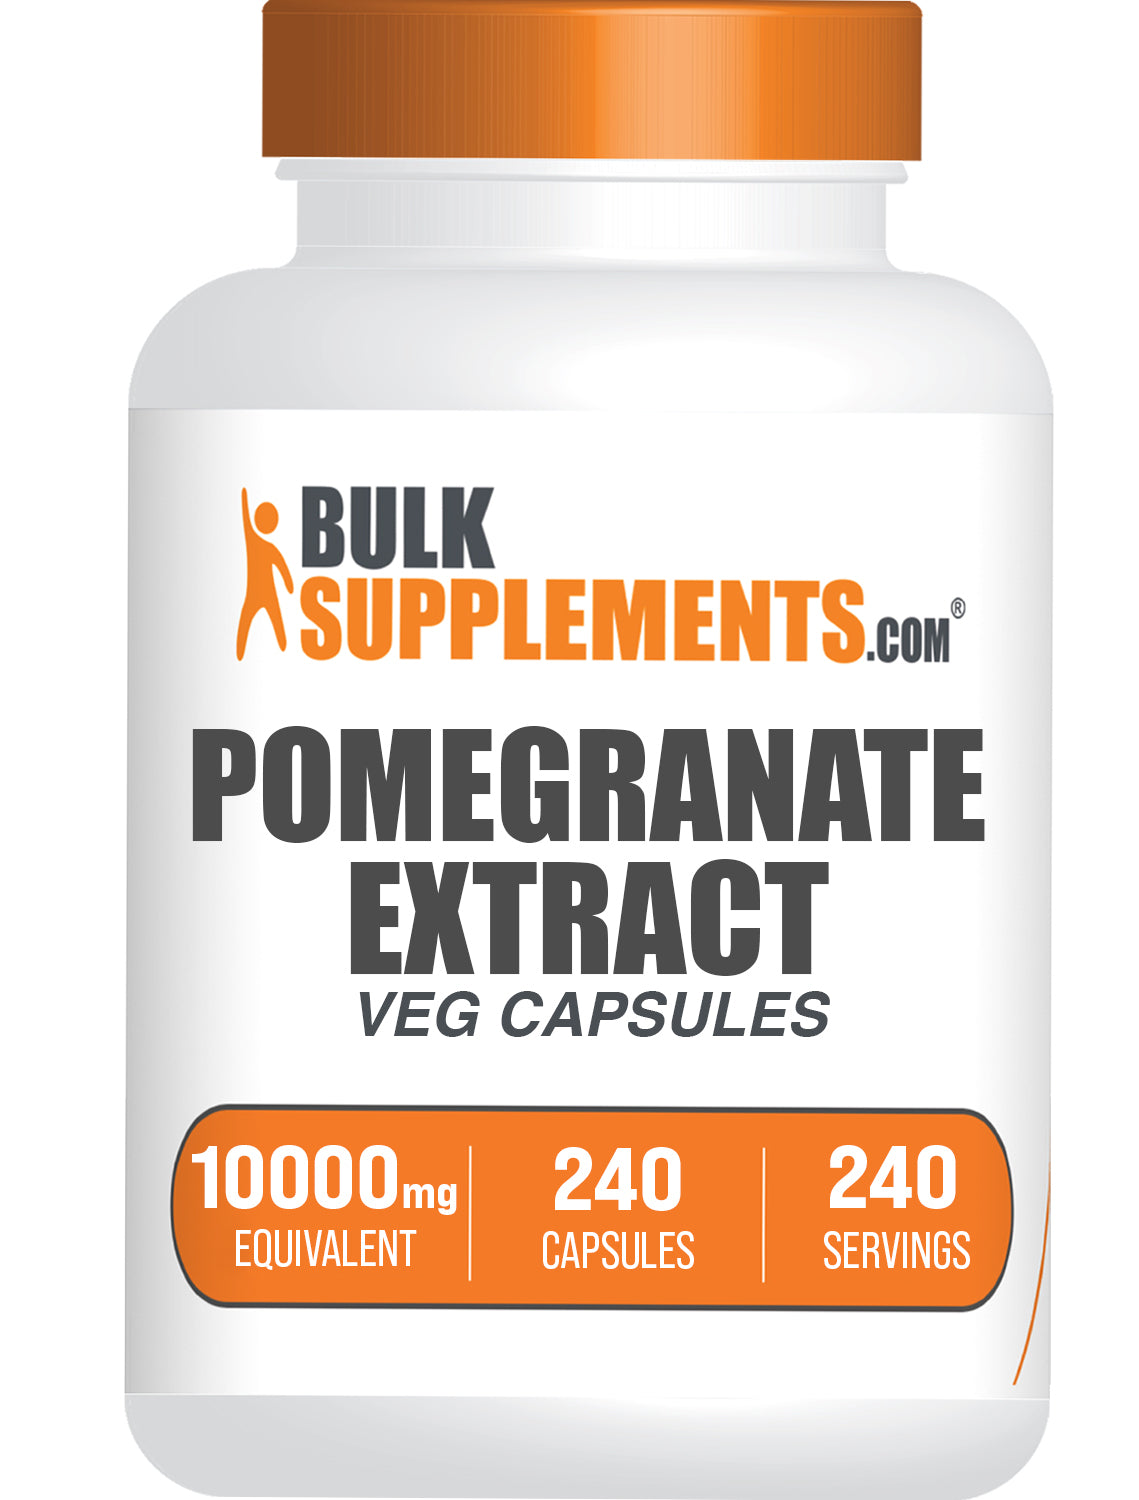 BulkSupplements.com Pomegranate Extract Capsules 240 ct bottle